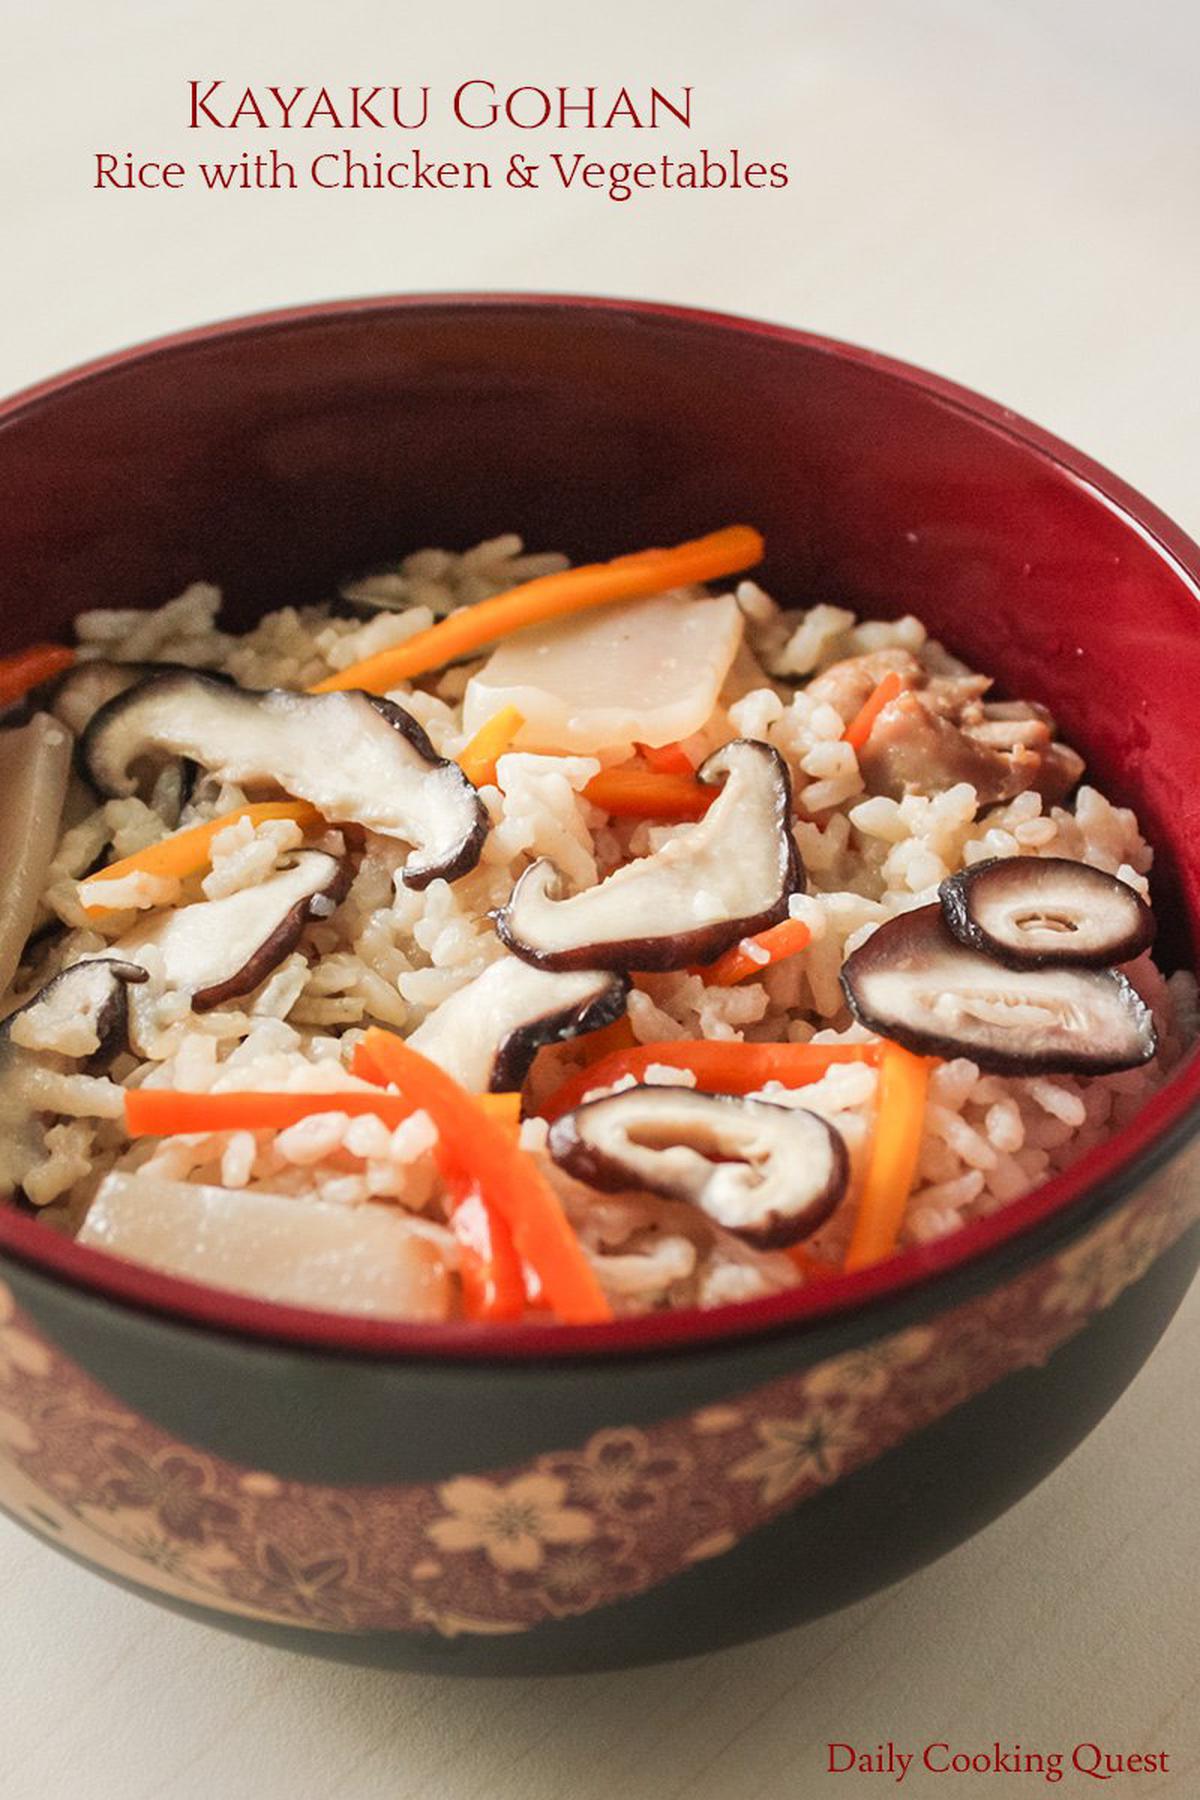 Kayaku Gohan - Rice with Chicken and Vegetables